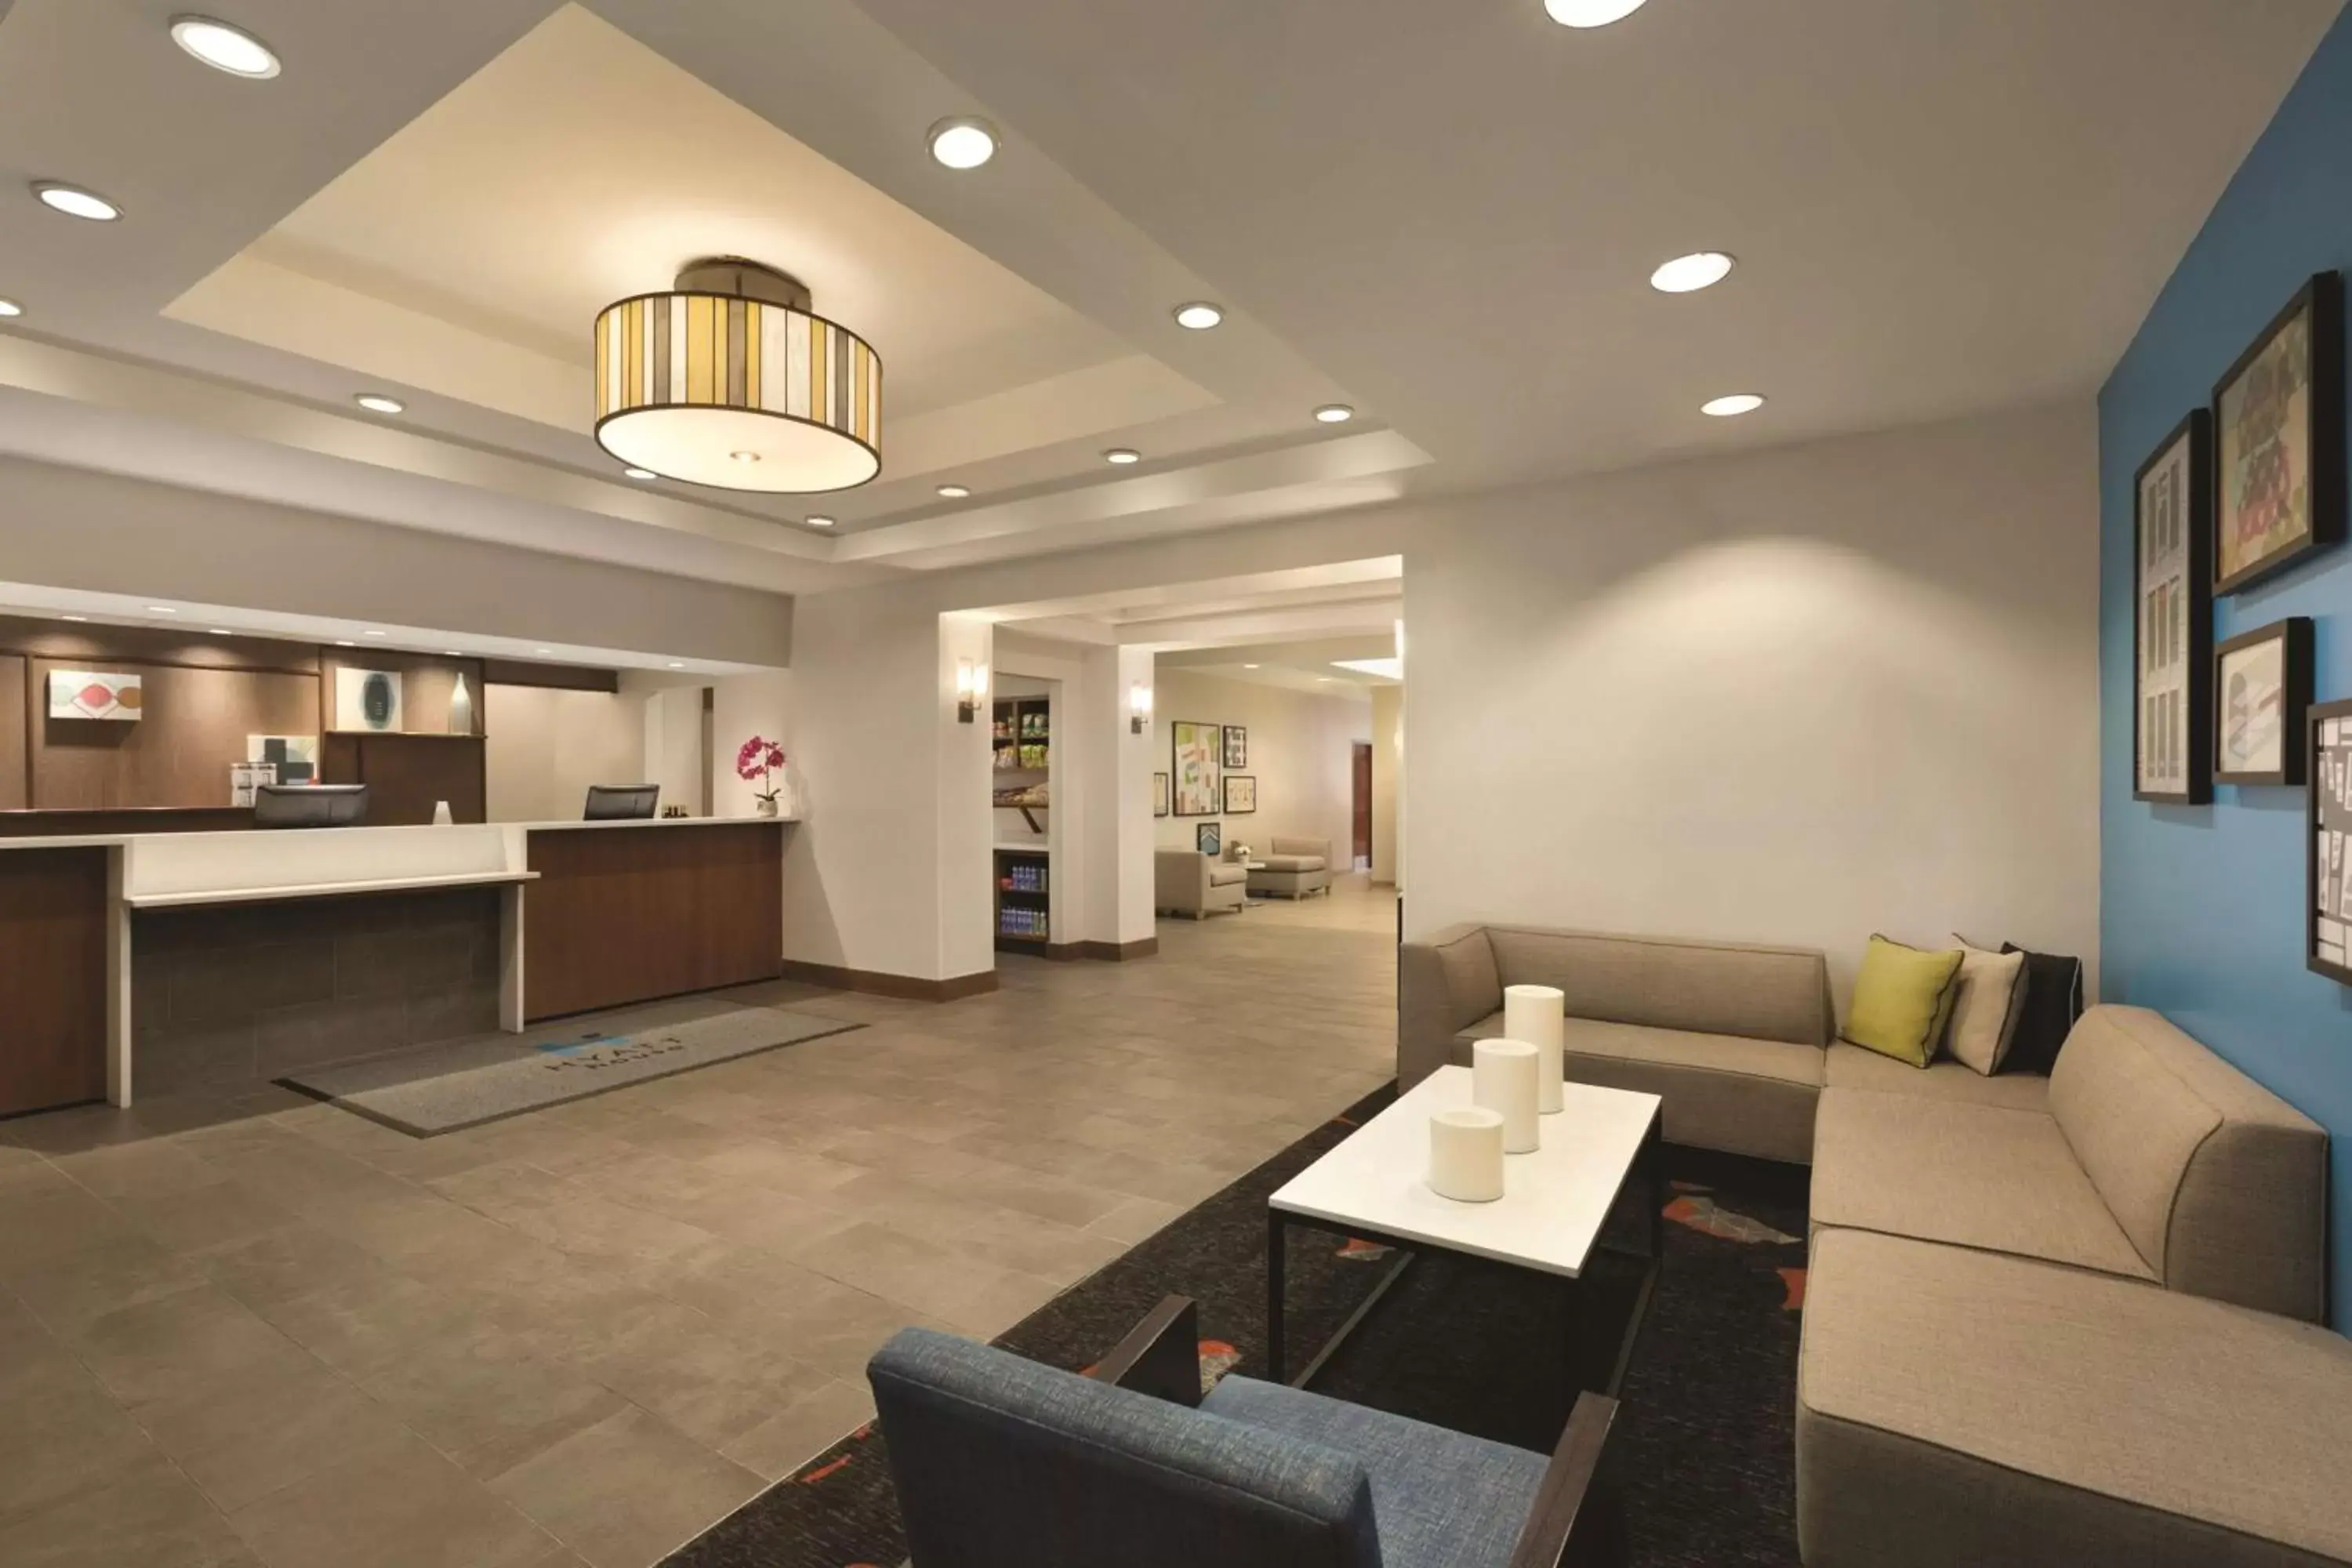 Lobby or reception in Hyatt House Miami Airport